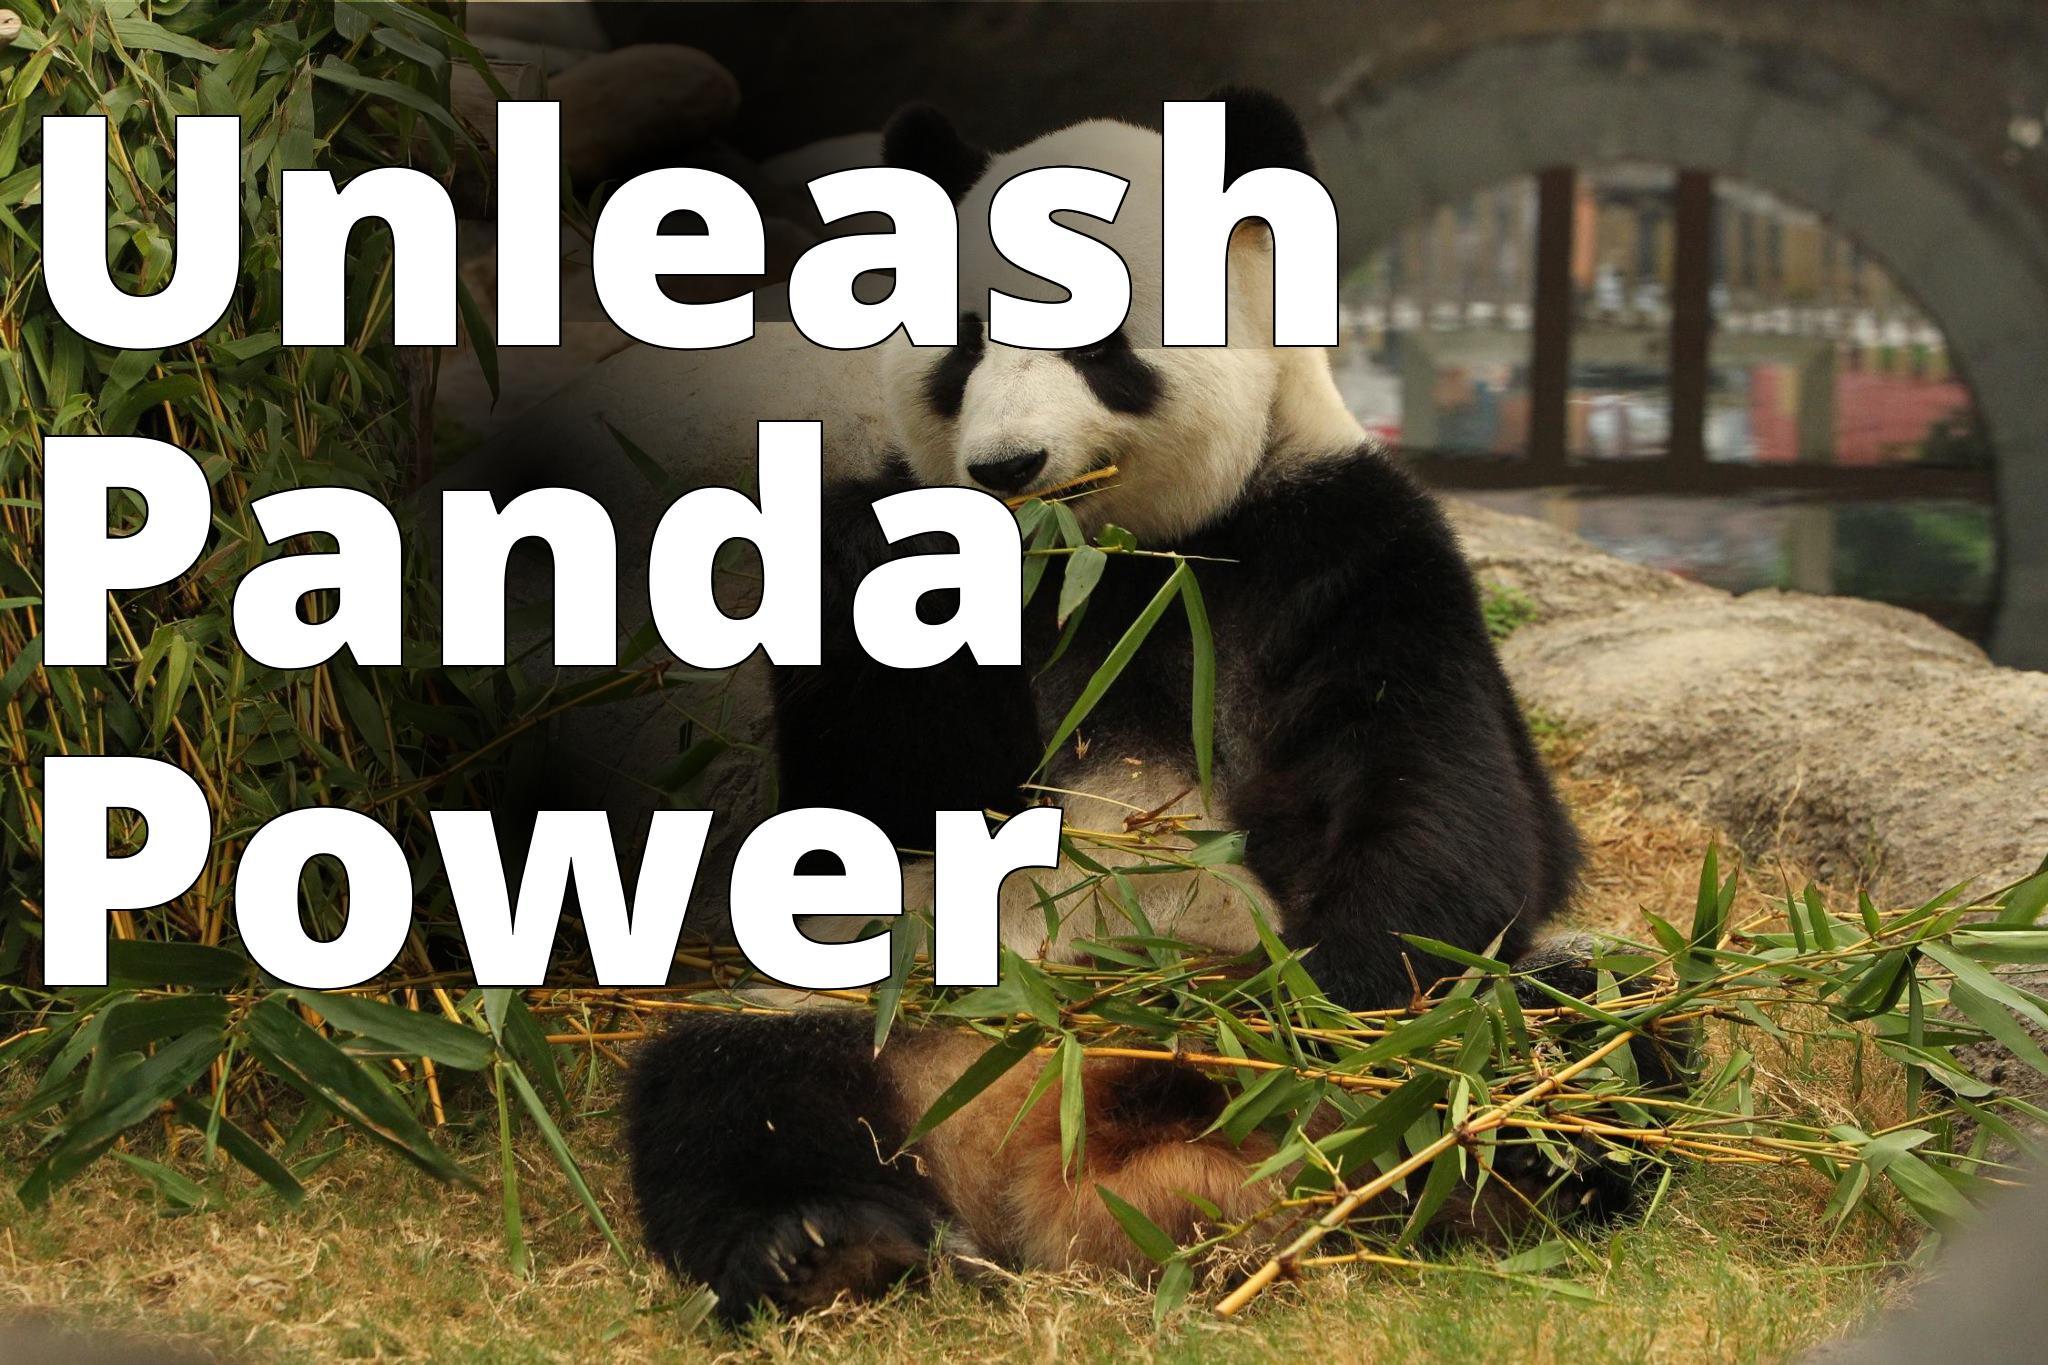 Amazing Asian Animals - Panda Ying Ying - a panda eating bamboo